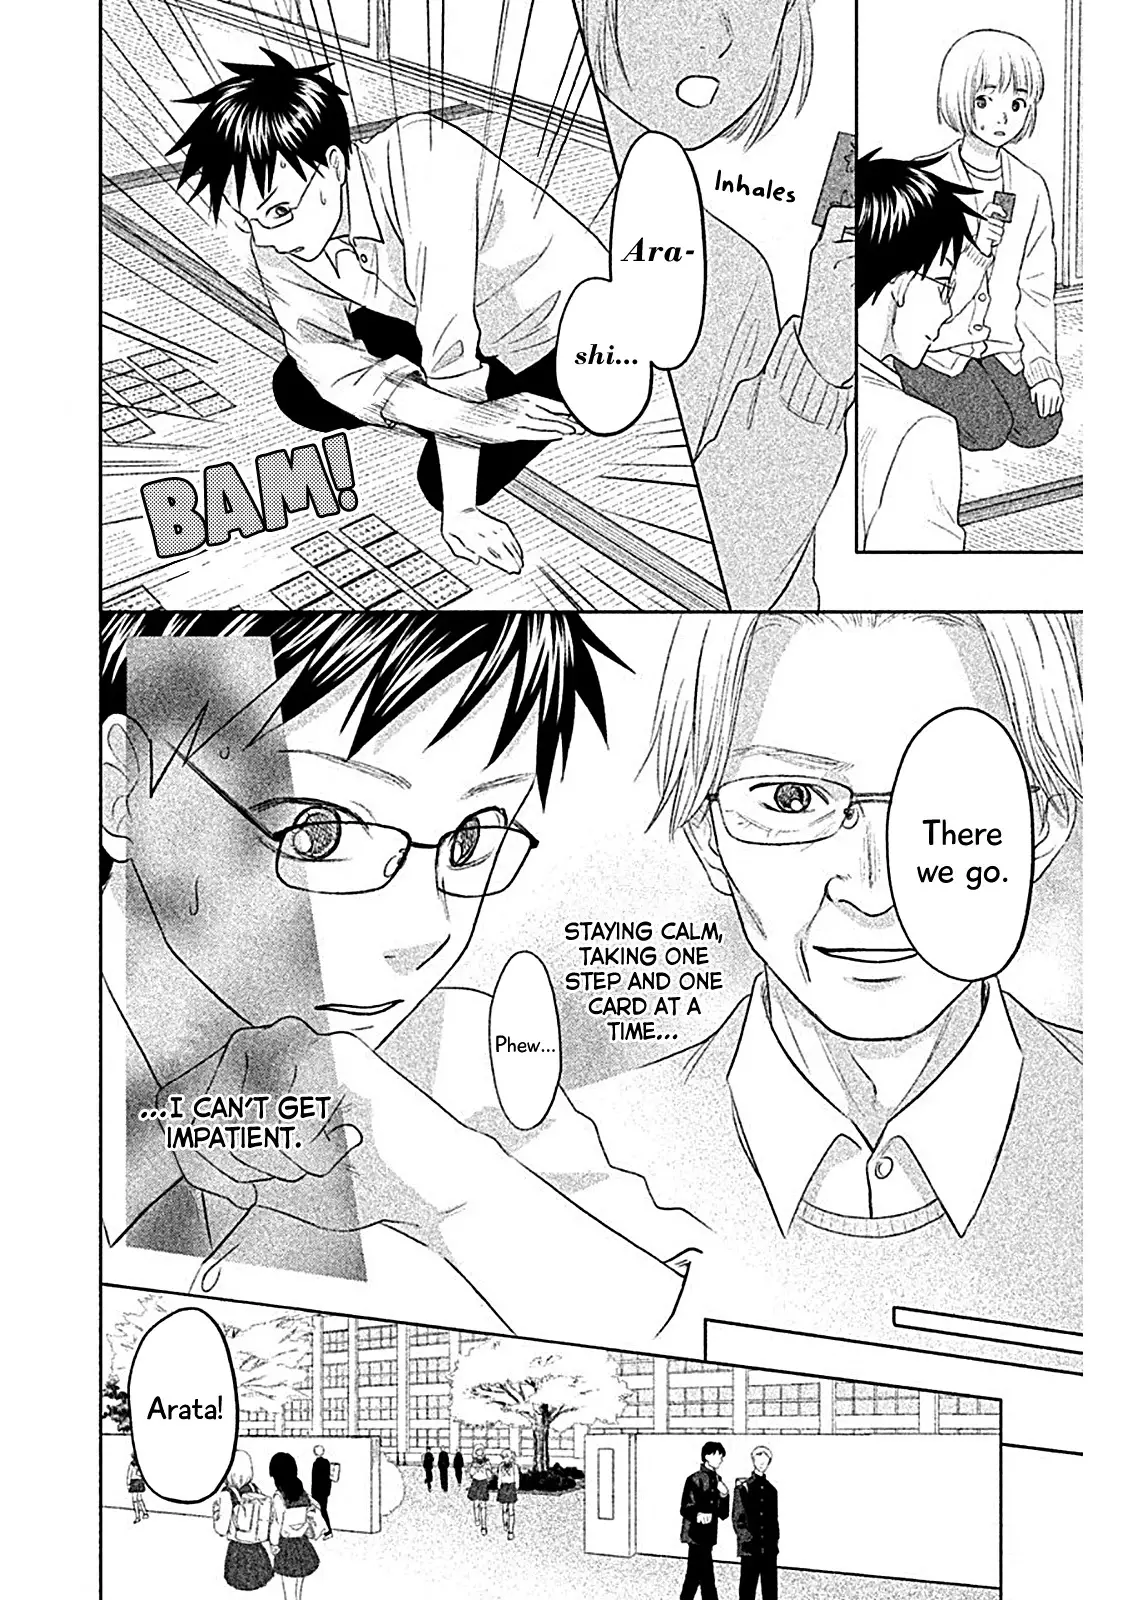 Chihayafuru: Middle School Arc - 7 page 14